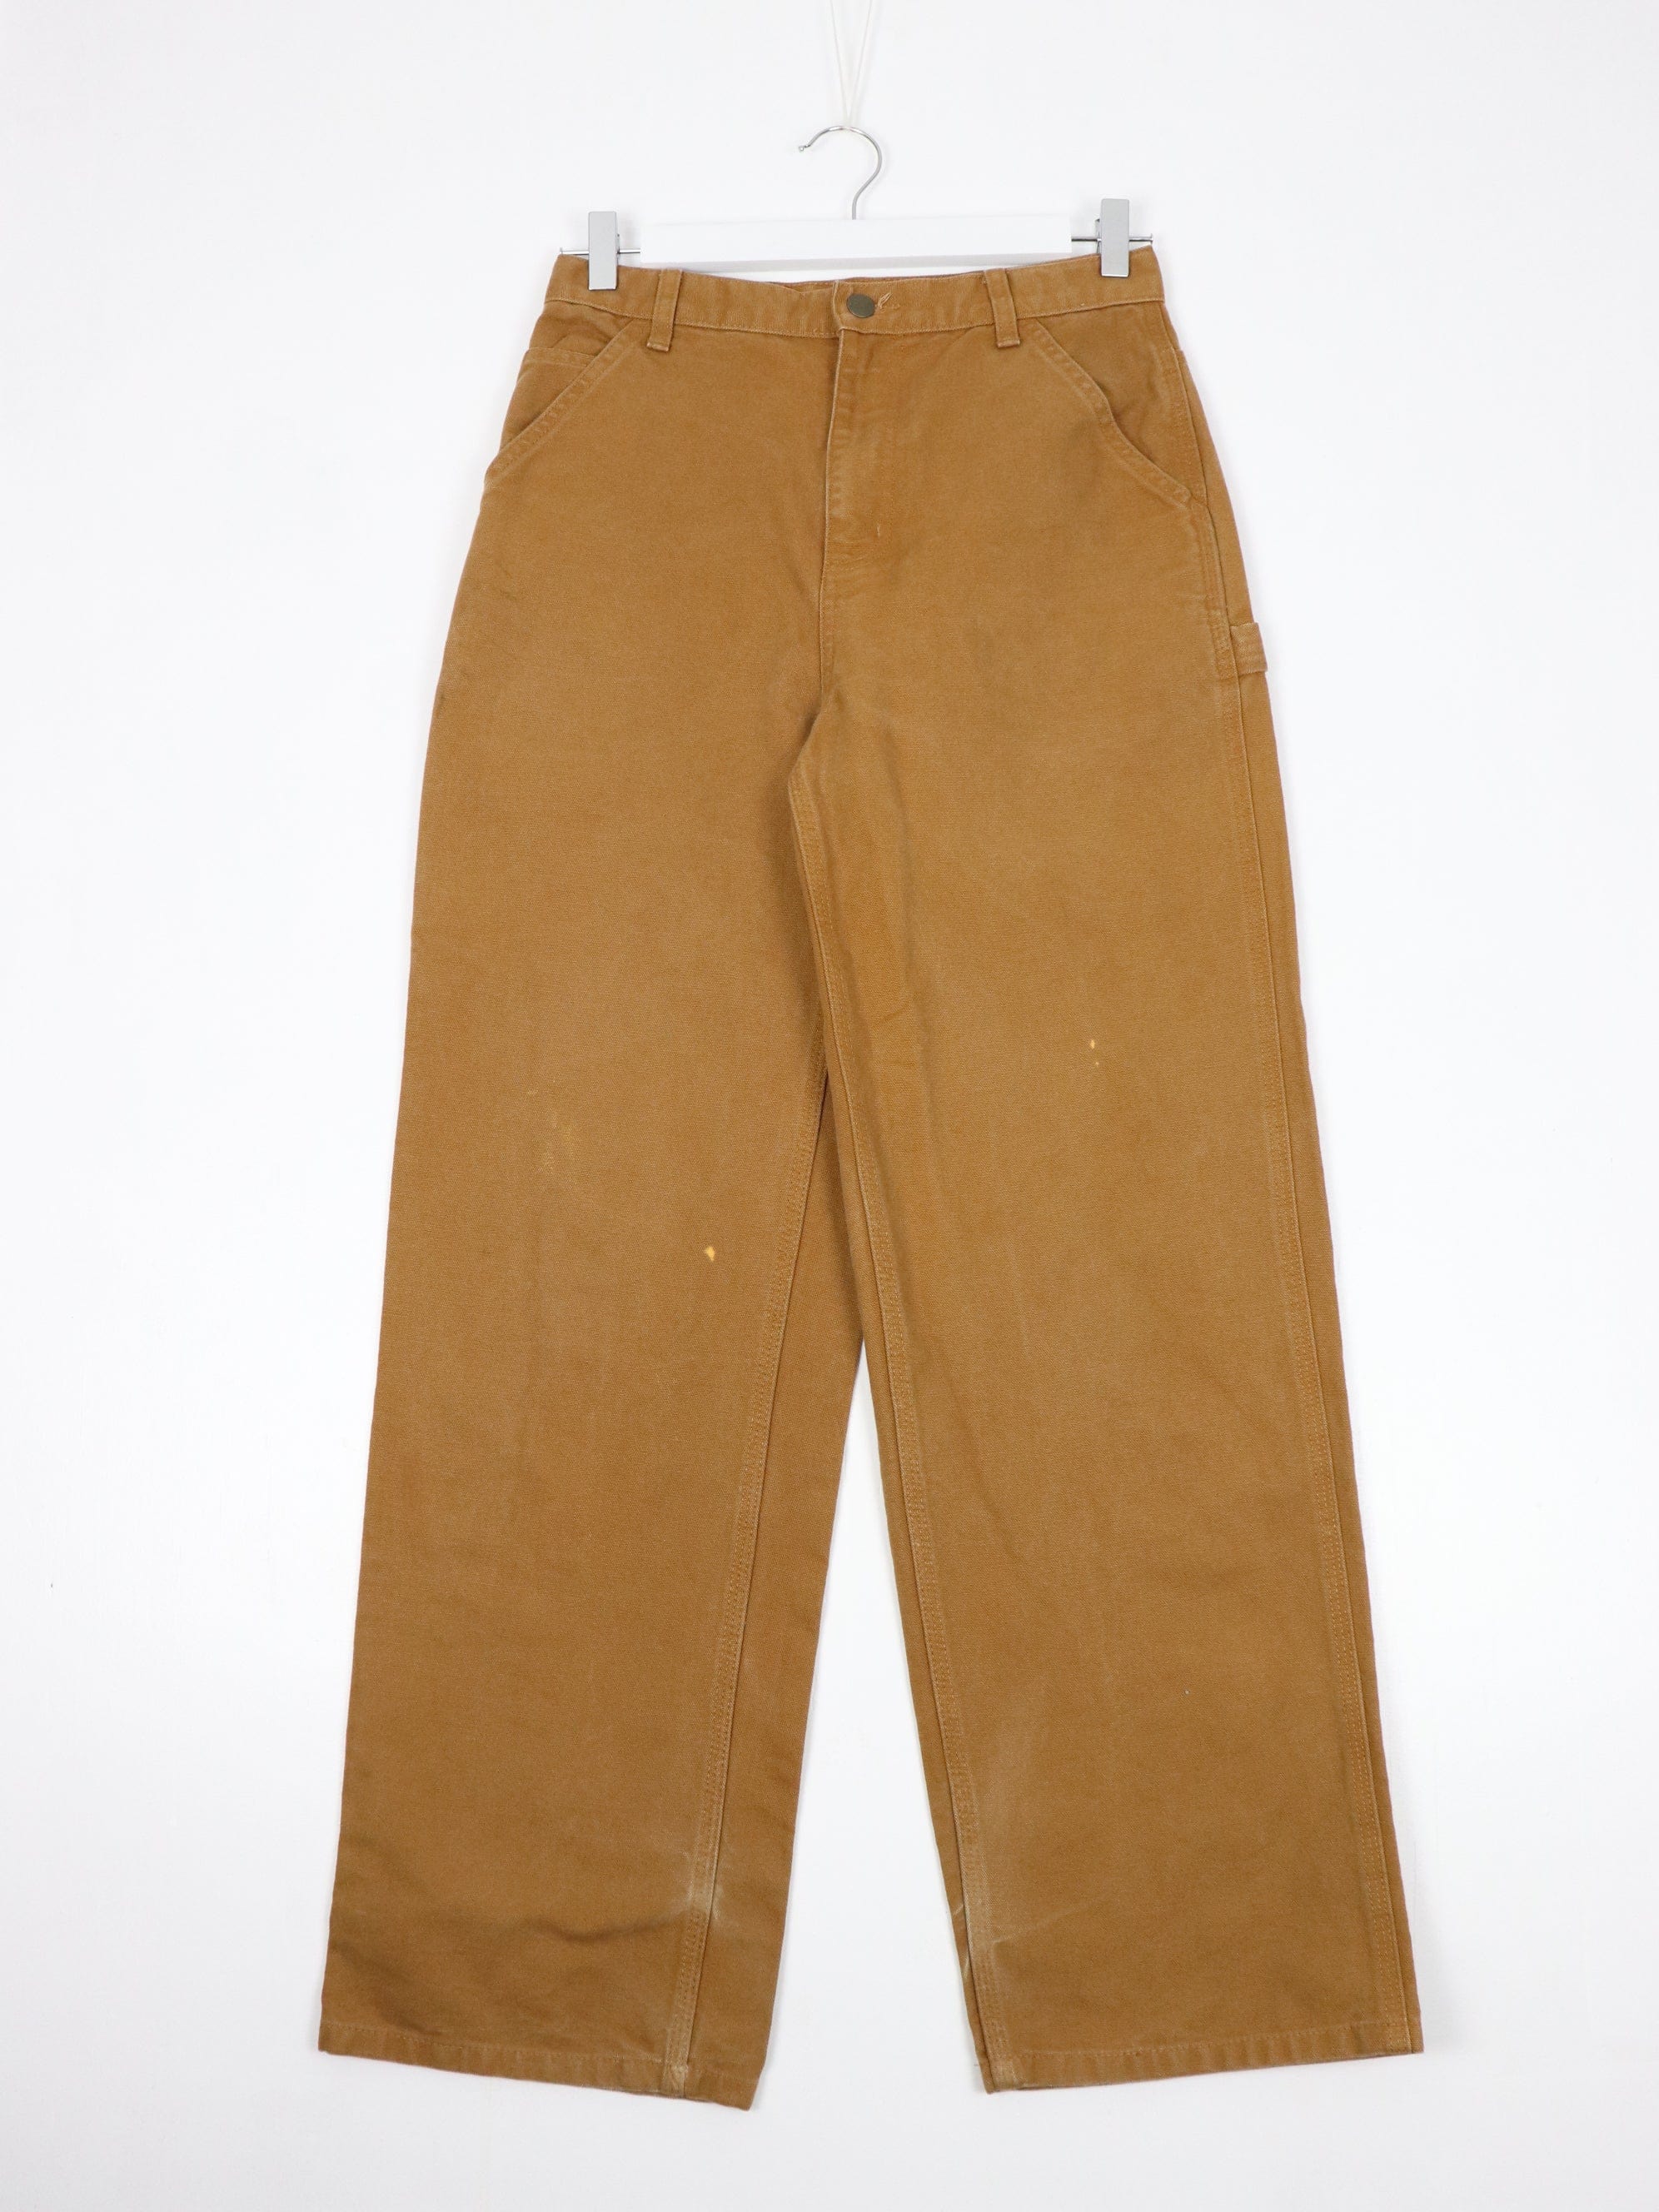 Carhartt Pants Womens 16 Brown Work Wear Carpenters 28 x 29